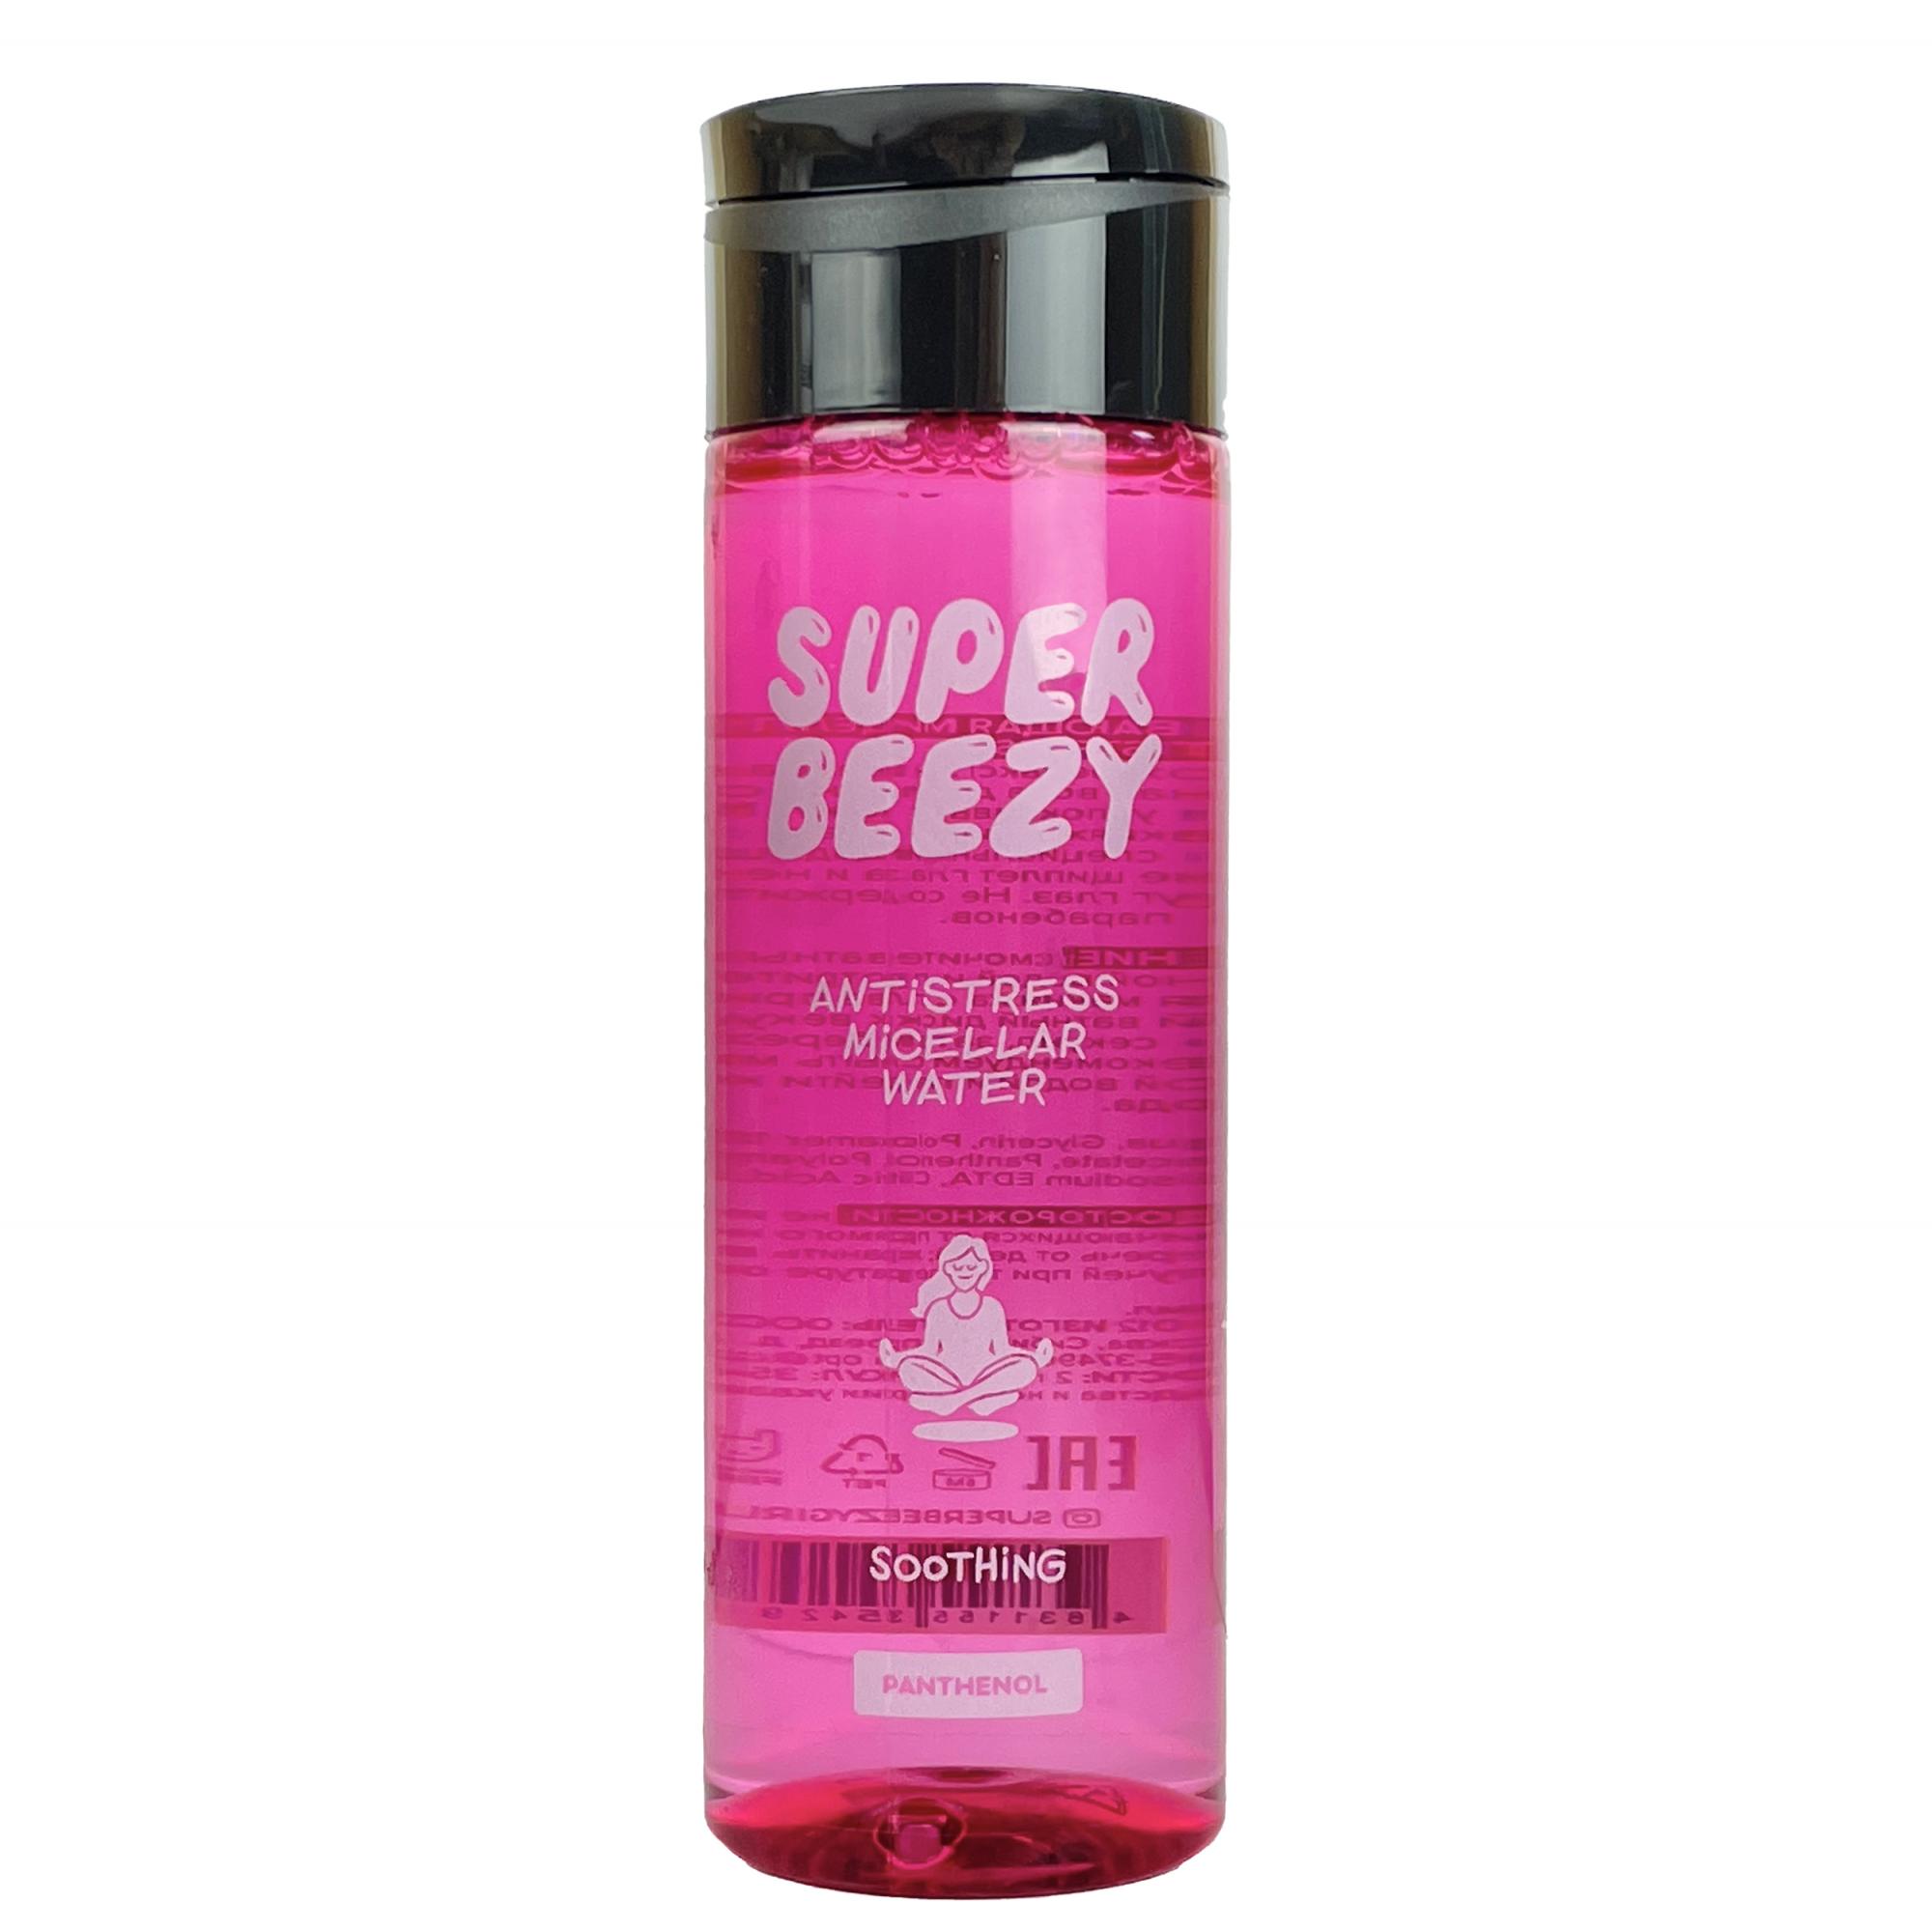 Super Beezy Успокаивающая мицеллярная вода, 200 мл (Super Be